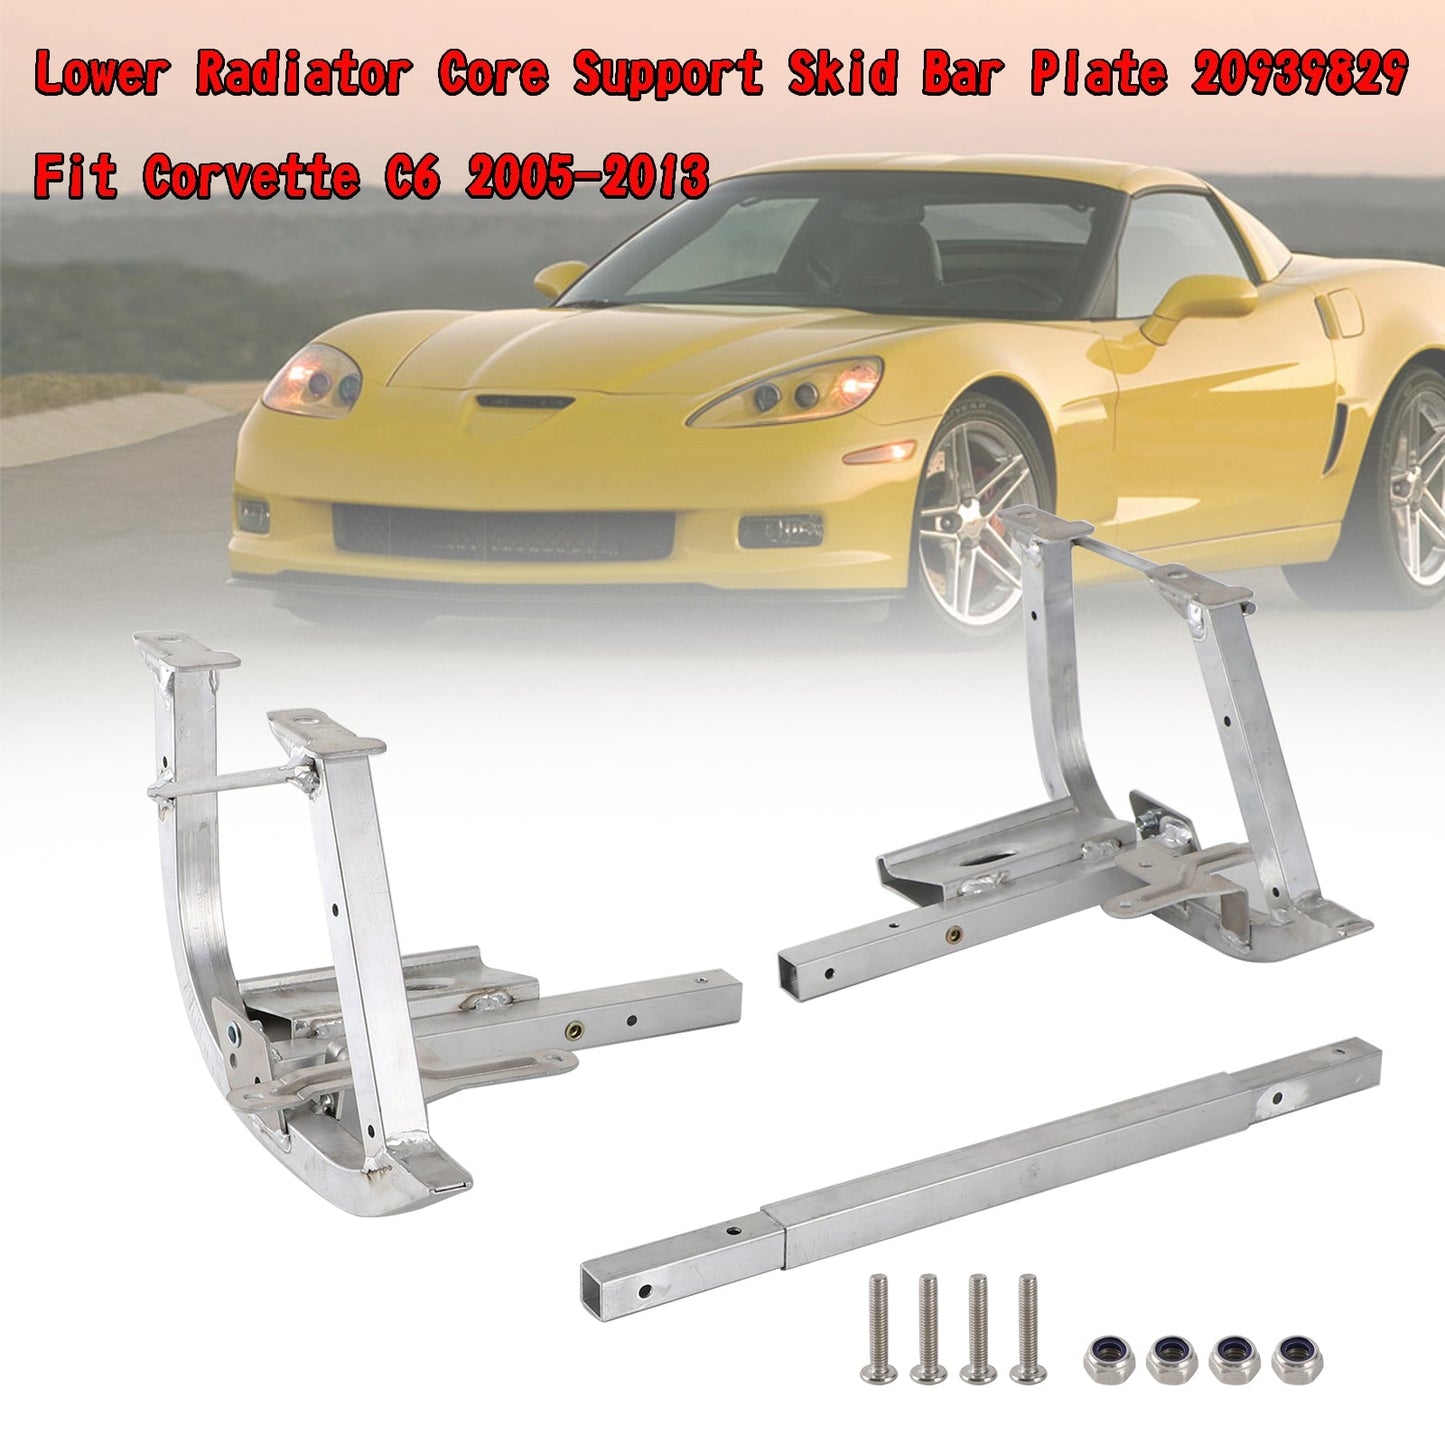 Lower Radiator Core Support Skid Bar Plate 20939829 Fit Corvette C6 2005-2013